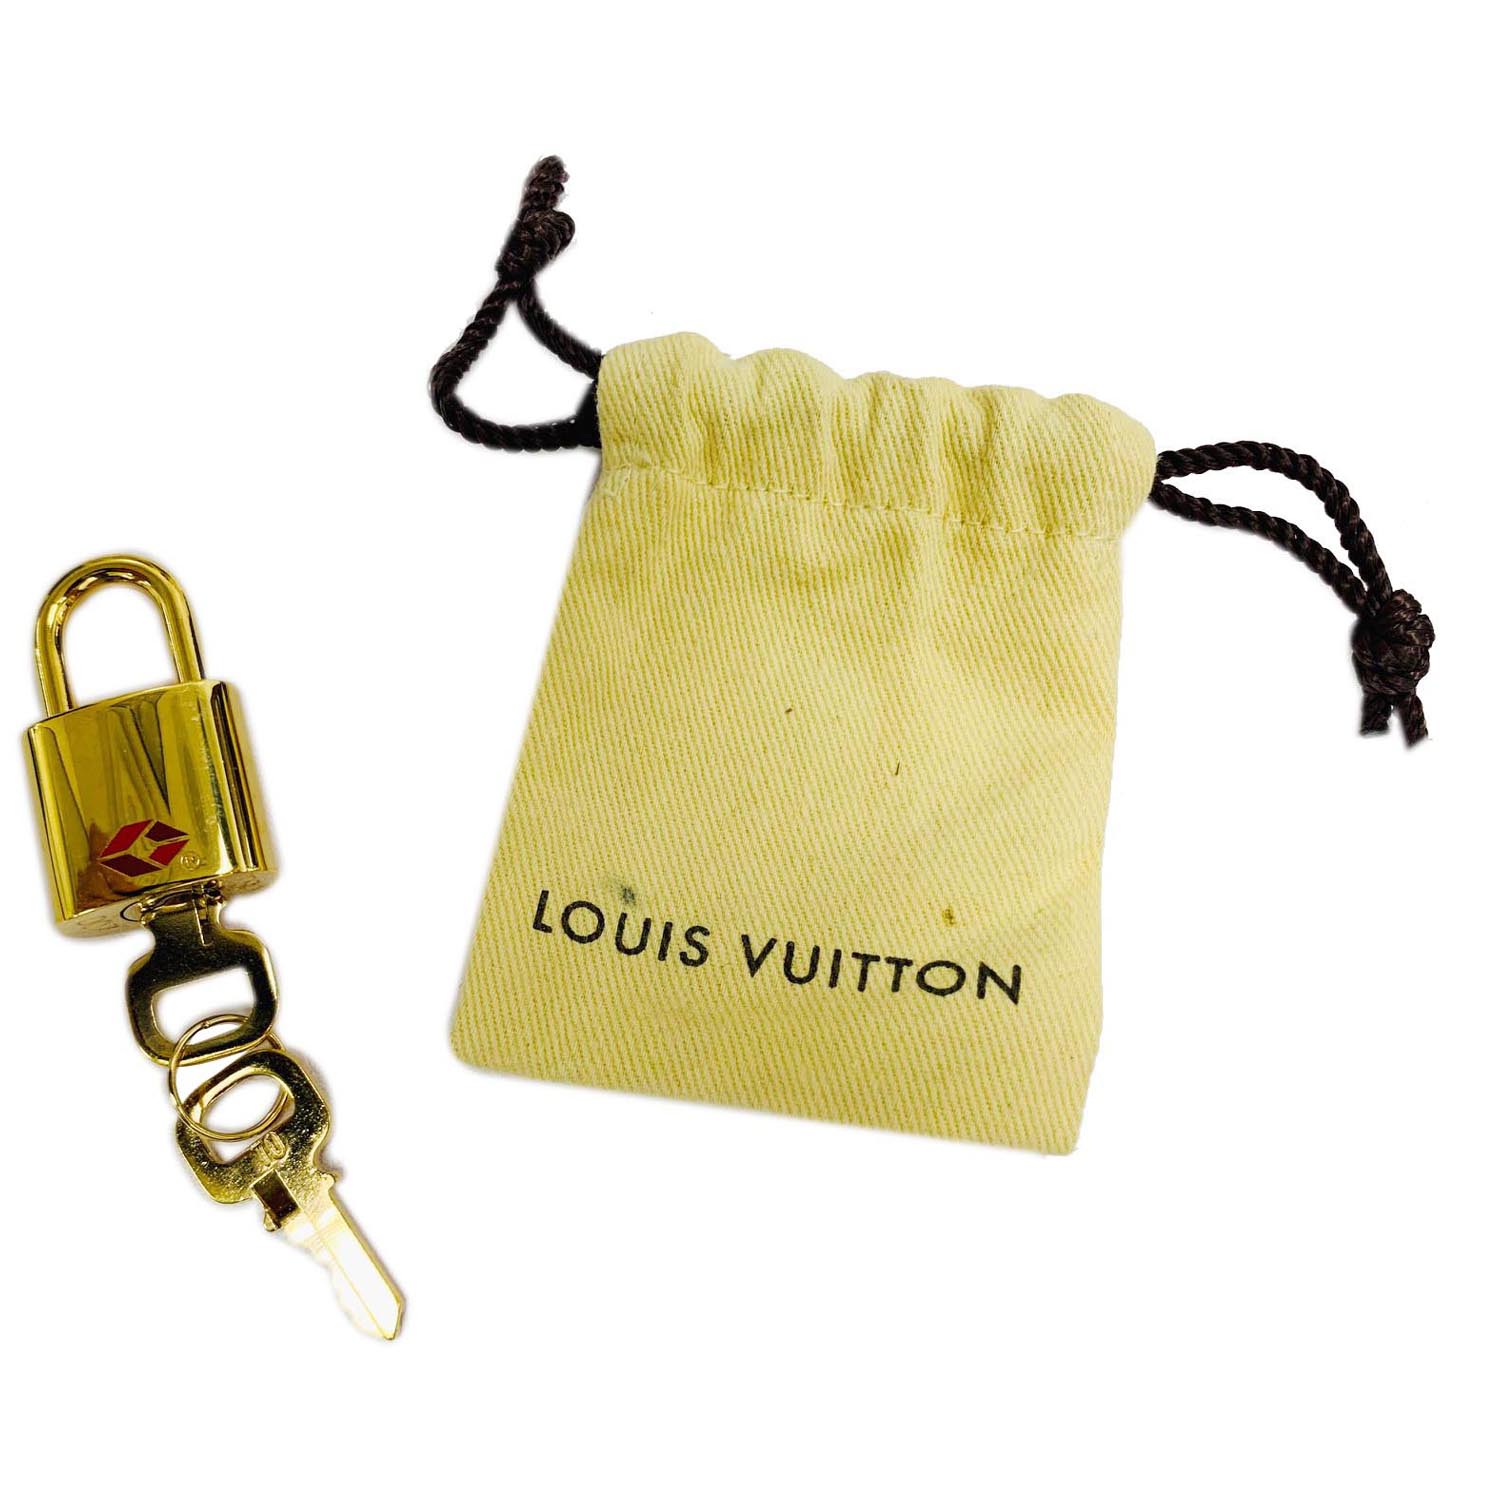 Louis Vuitton Speedy Lock and Keys set (New Condition) - Dust Bag